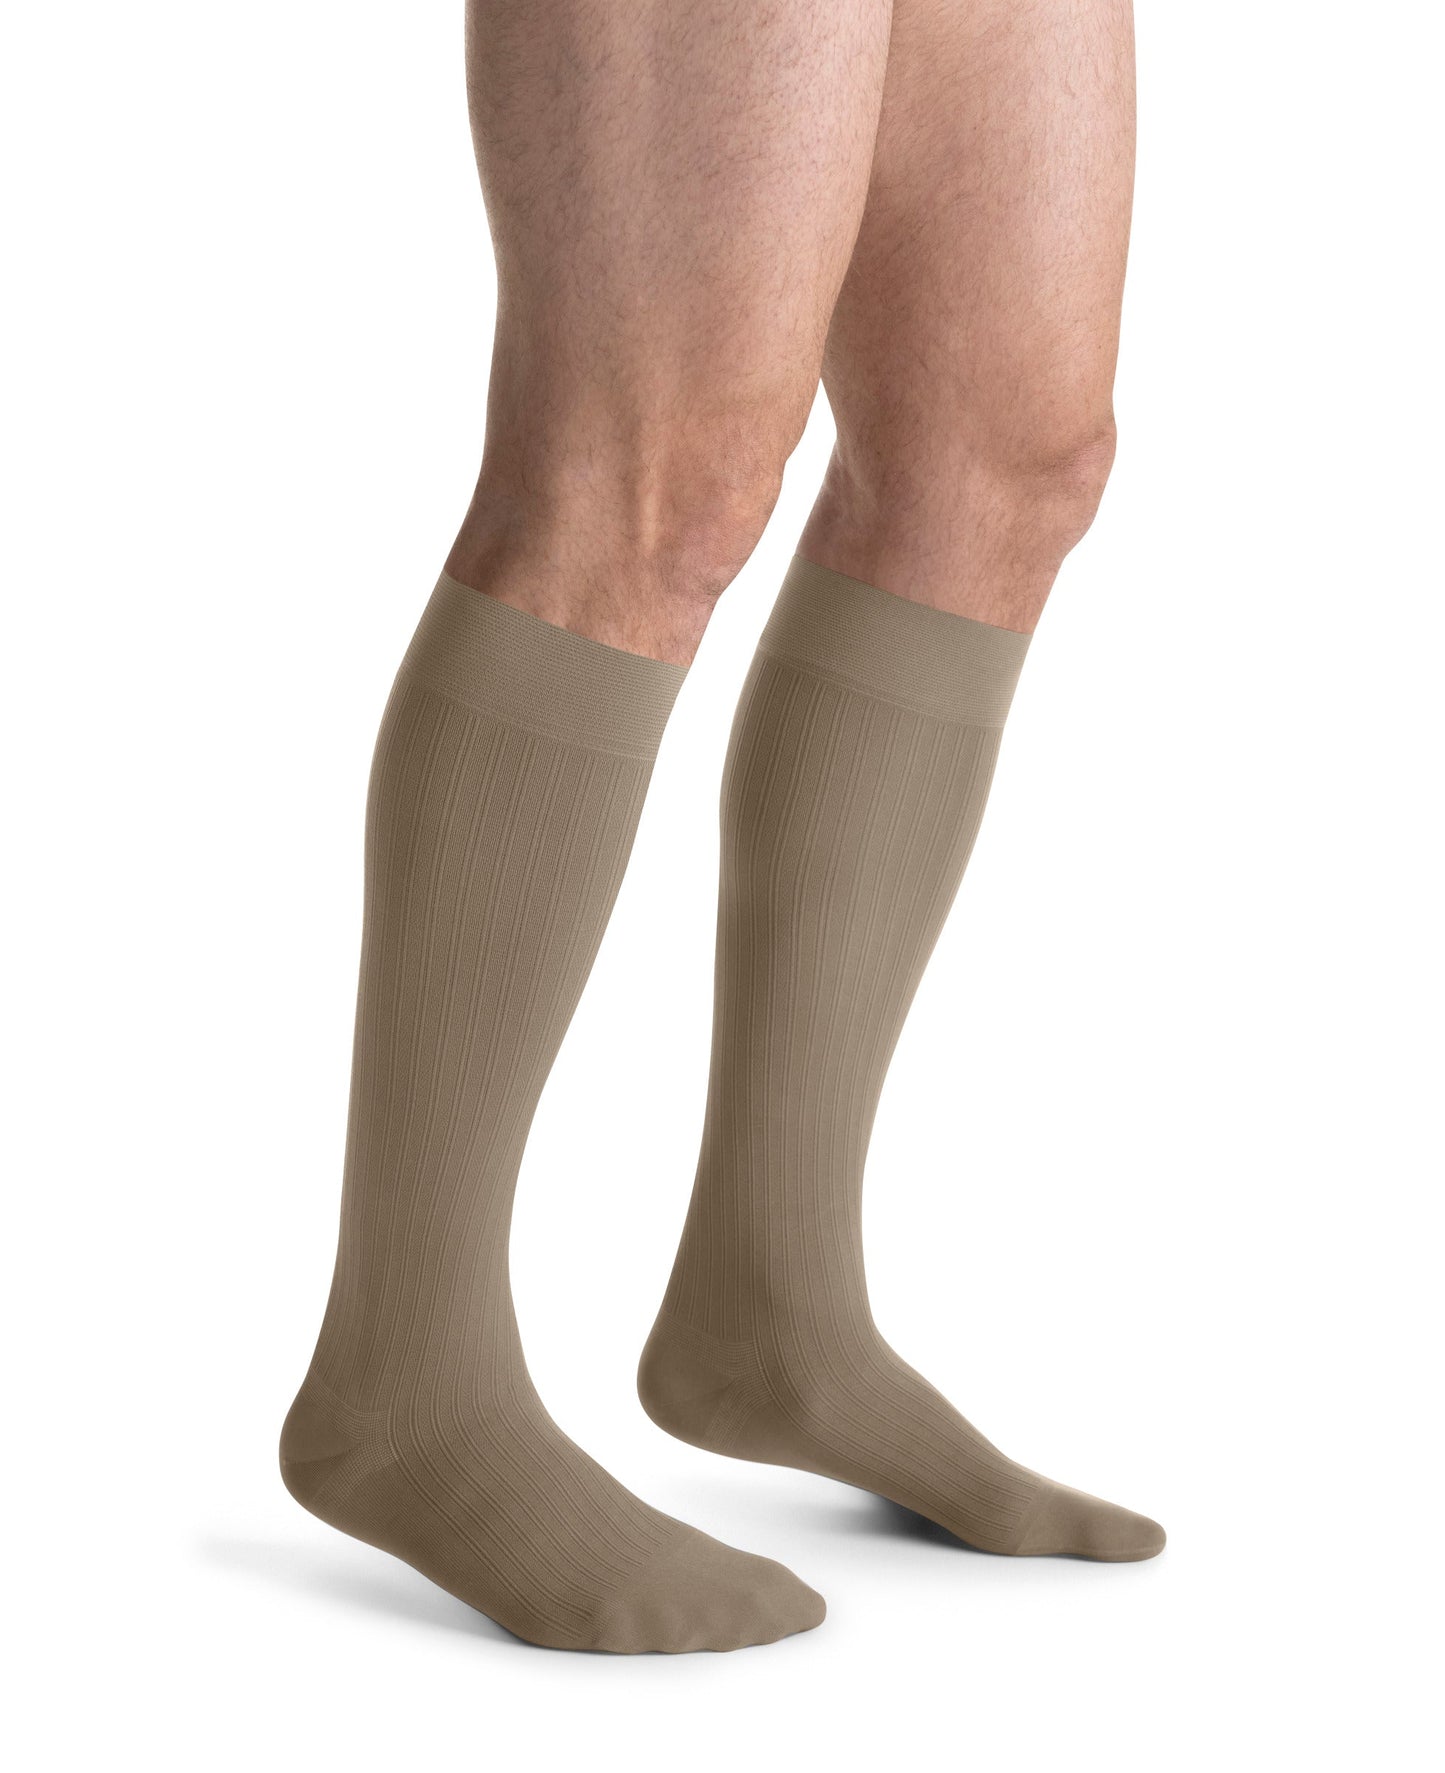 JOBST forMen Ambition Compression Socks 15-20 mmHg Knee High SoftFit Closed Toe